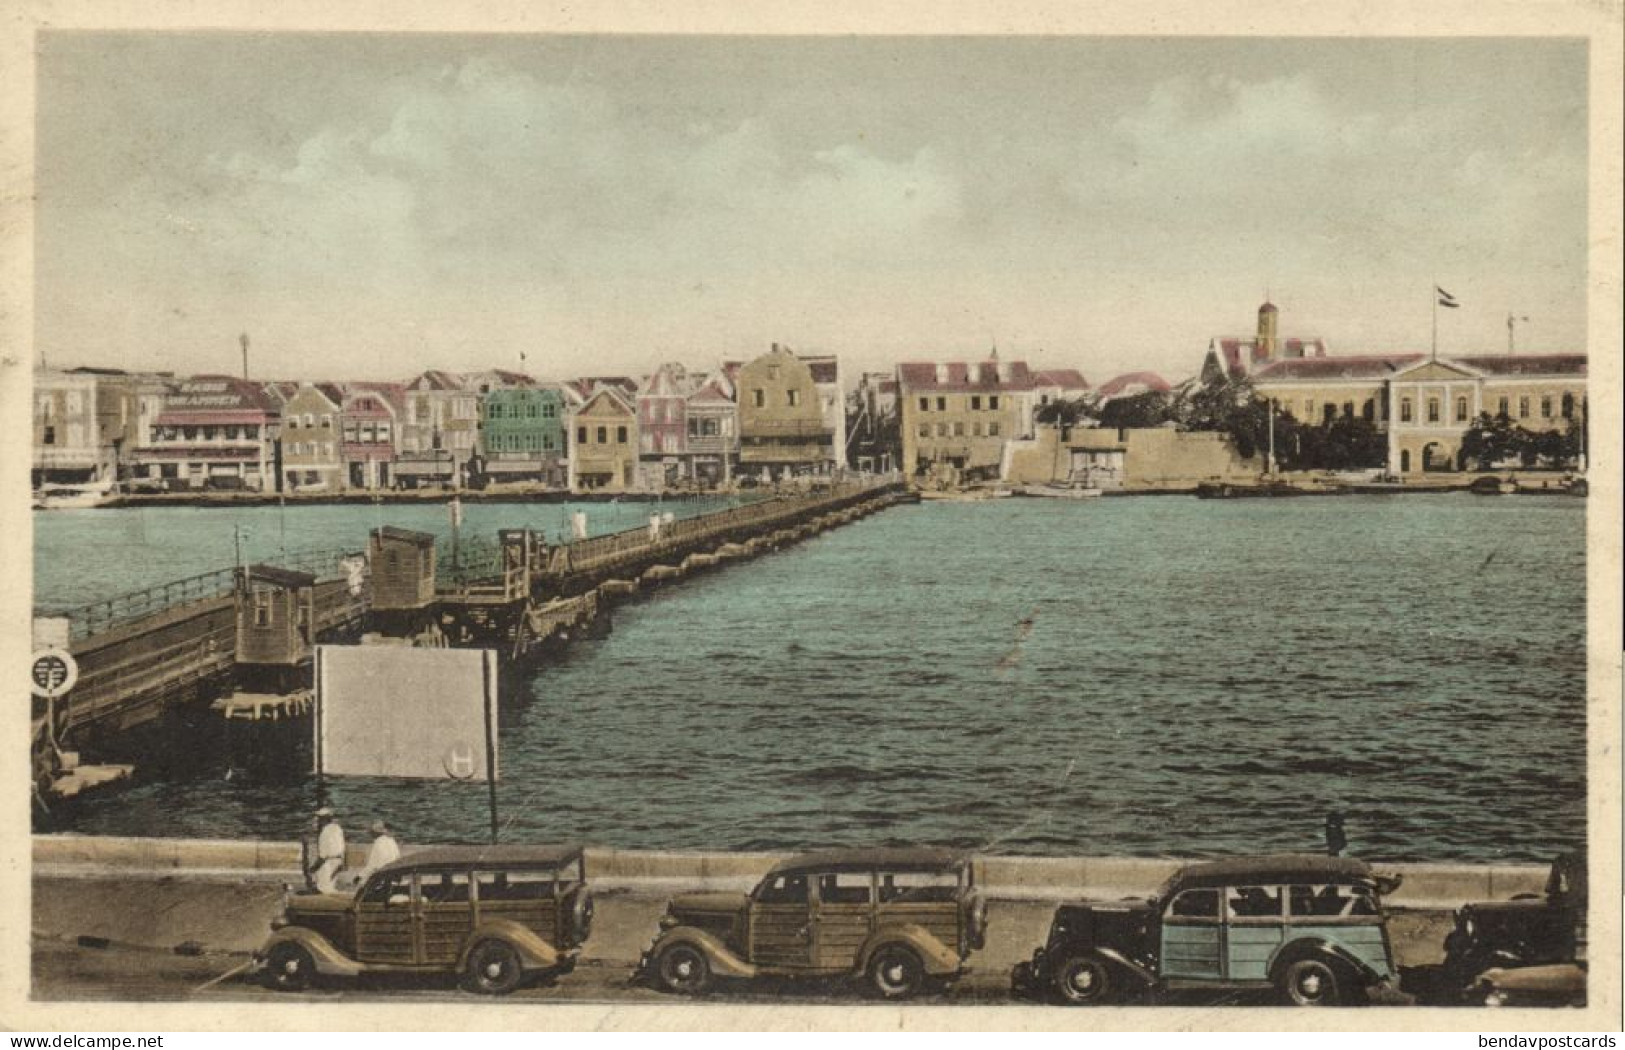 Curacao, D.W.I., WILLEMSTAD, Pontoon Bridge, Cars (1930s) Postcard - Curaçao